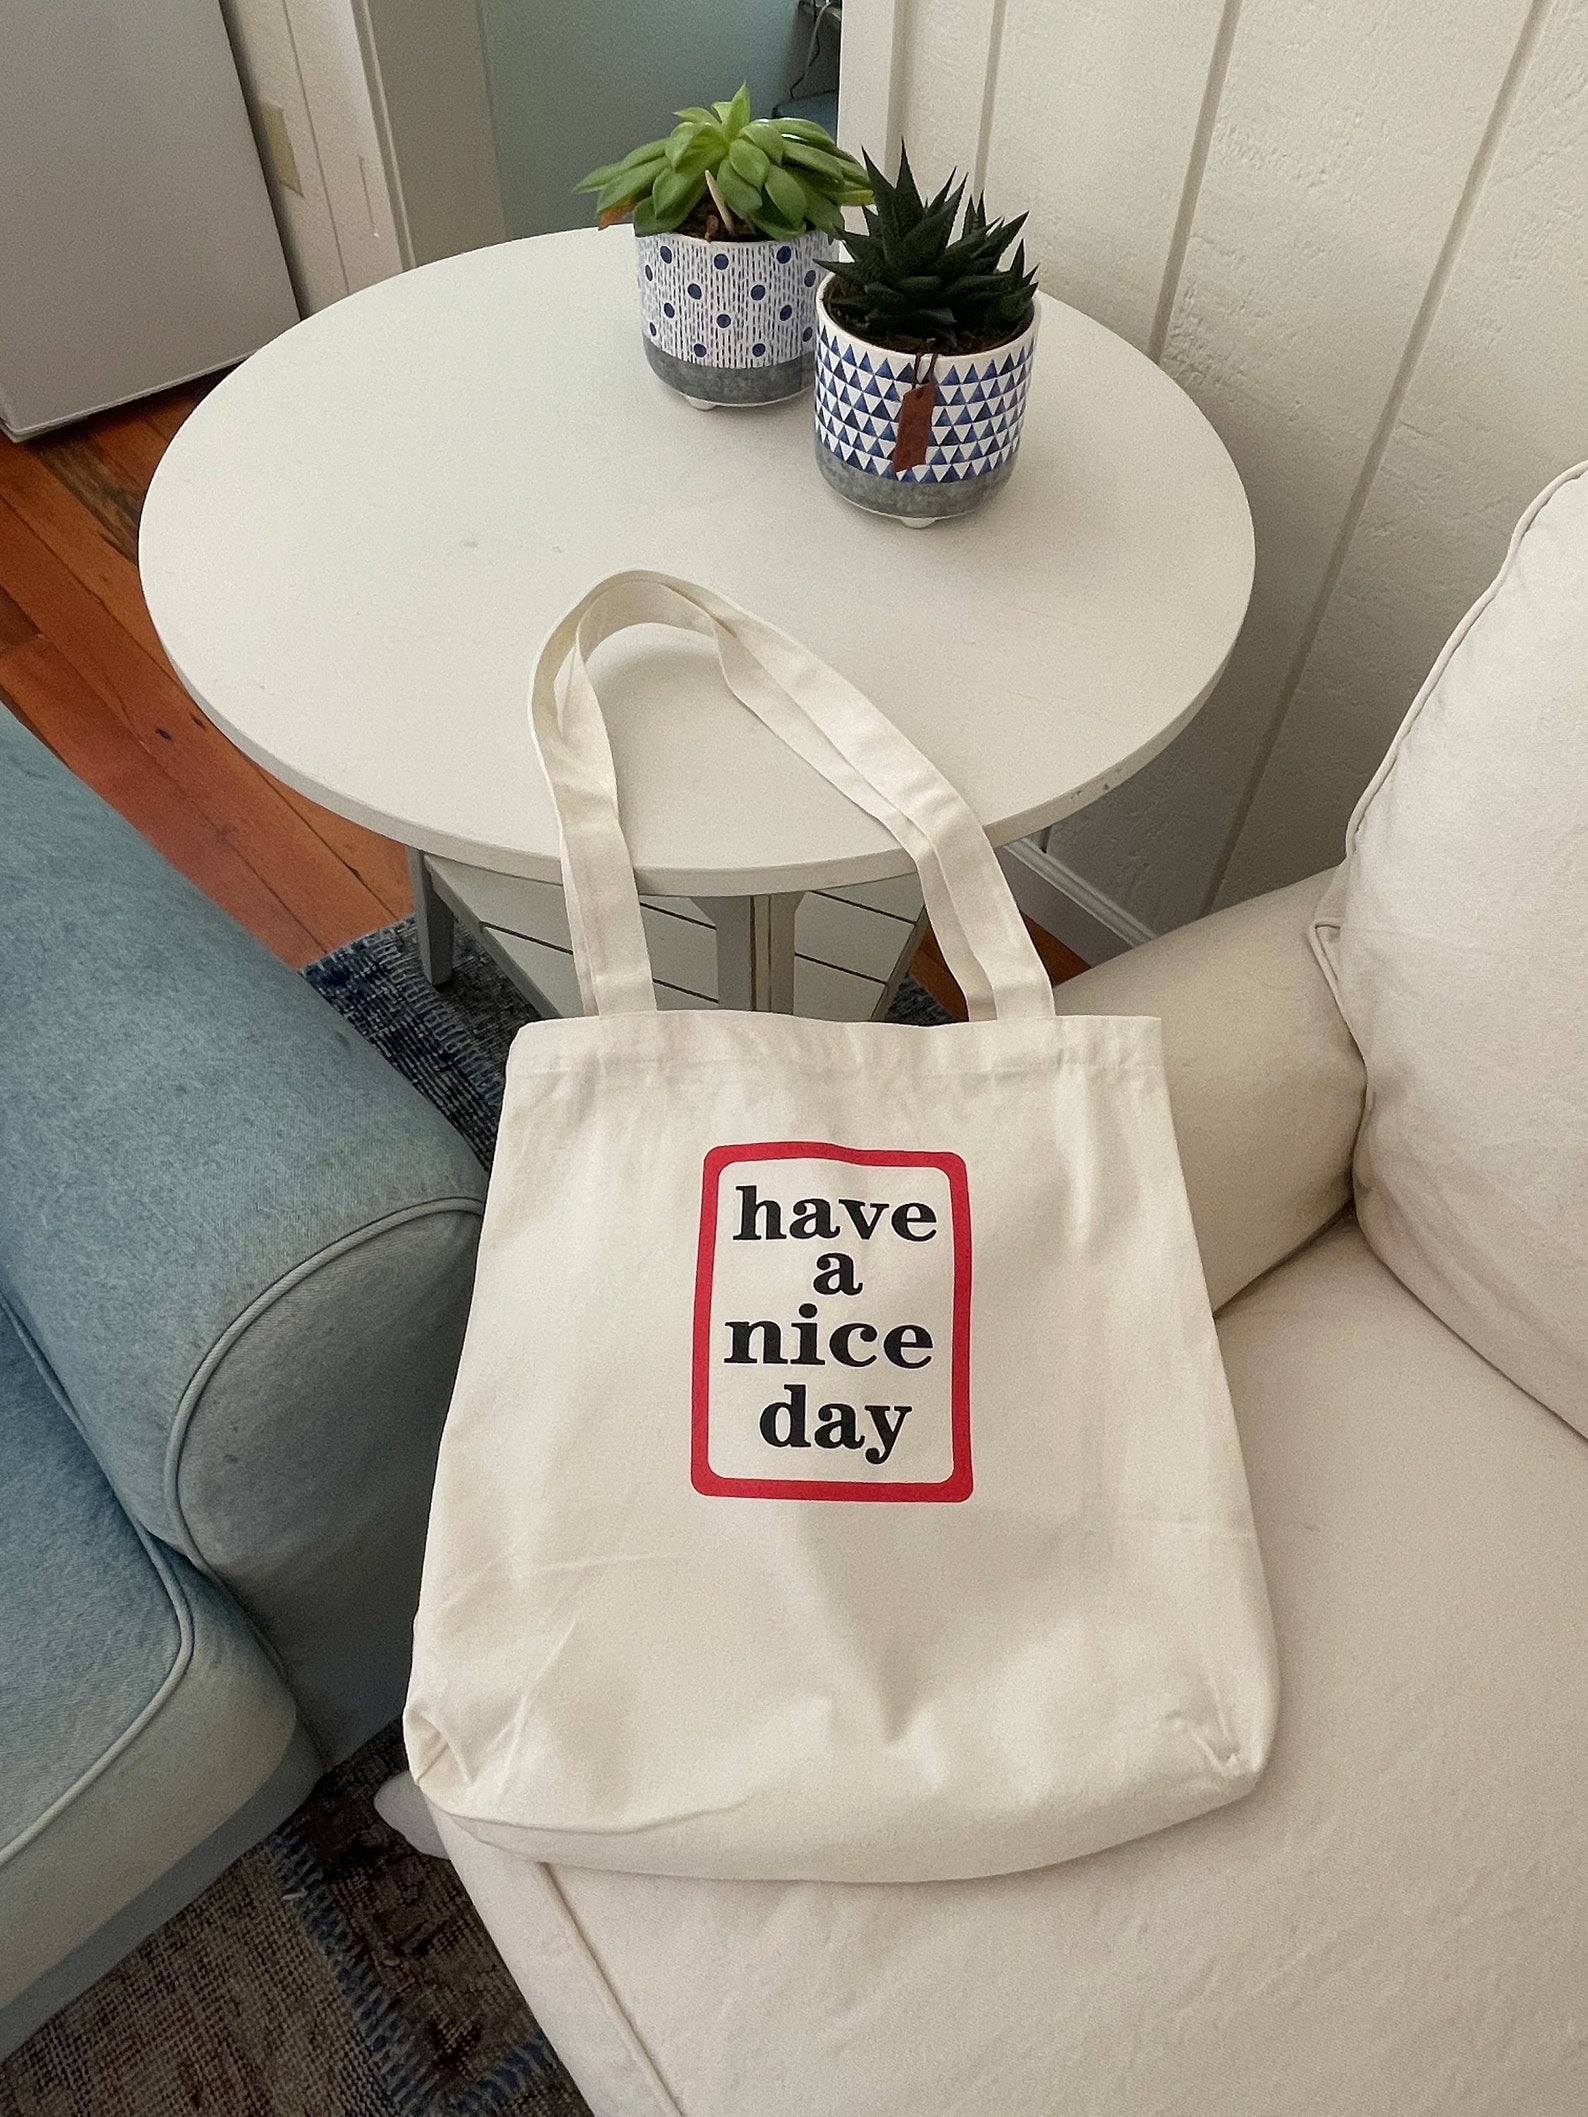 Have a Nice Day Tote Bag Reusable Shoulder Bag Grocery - Etsy